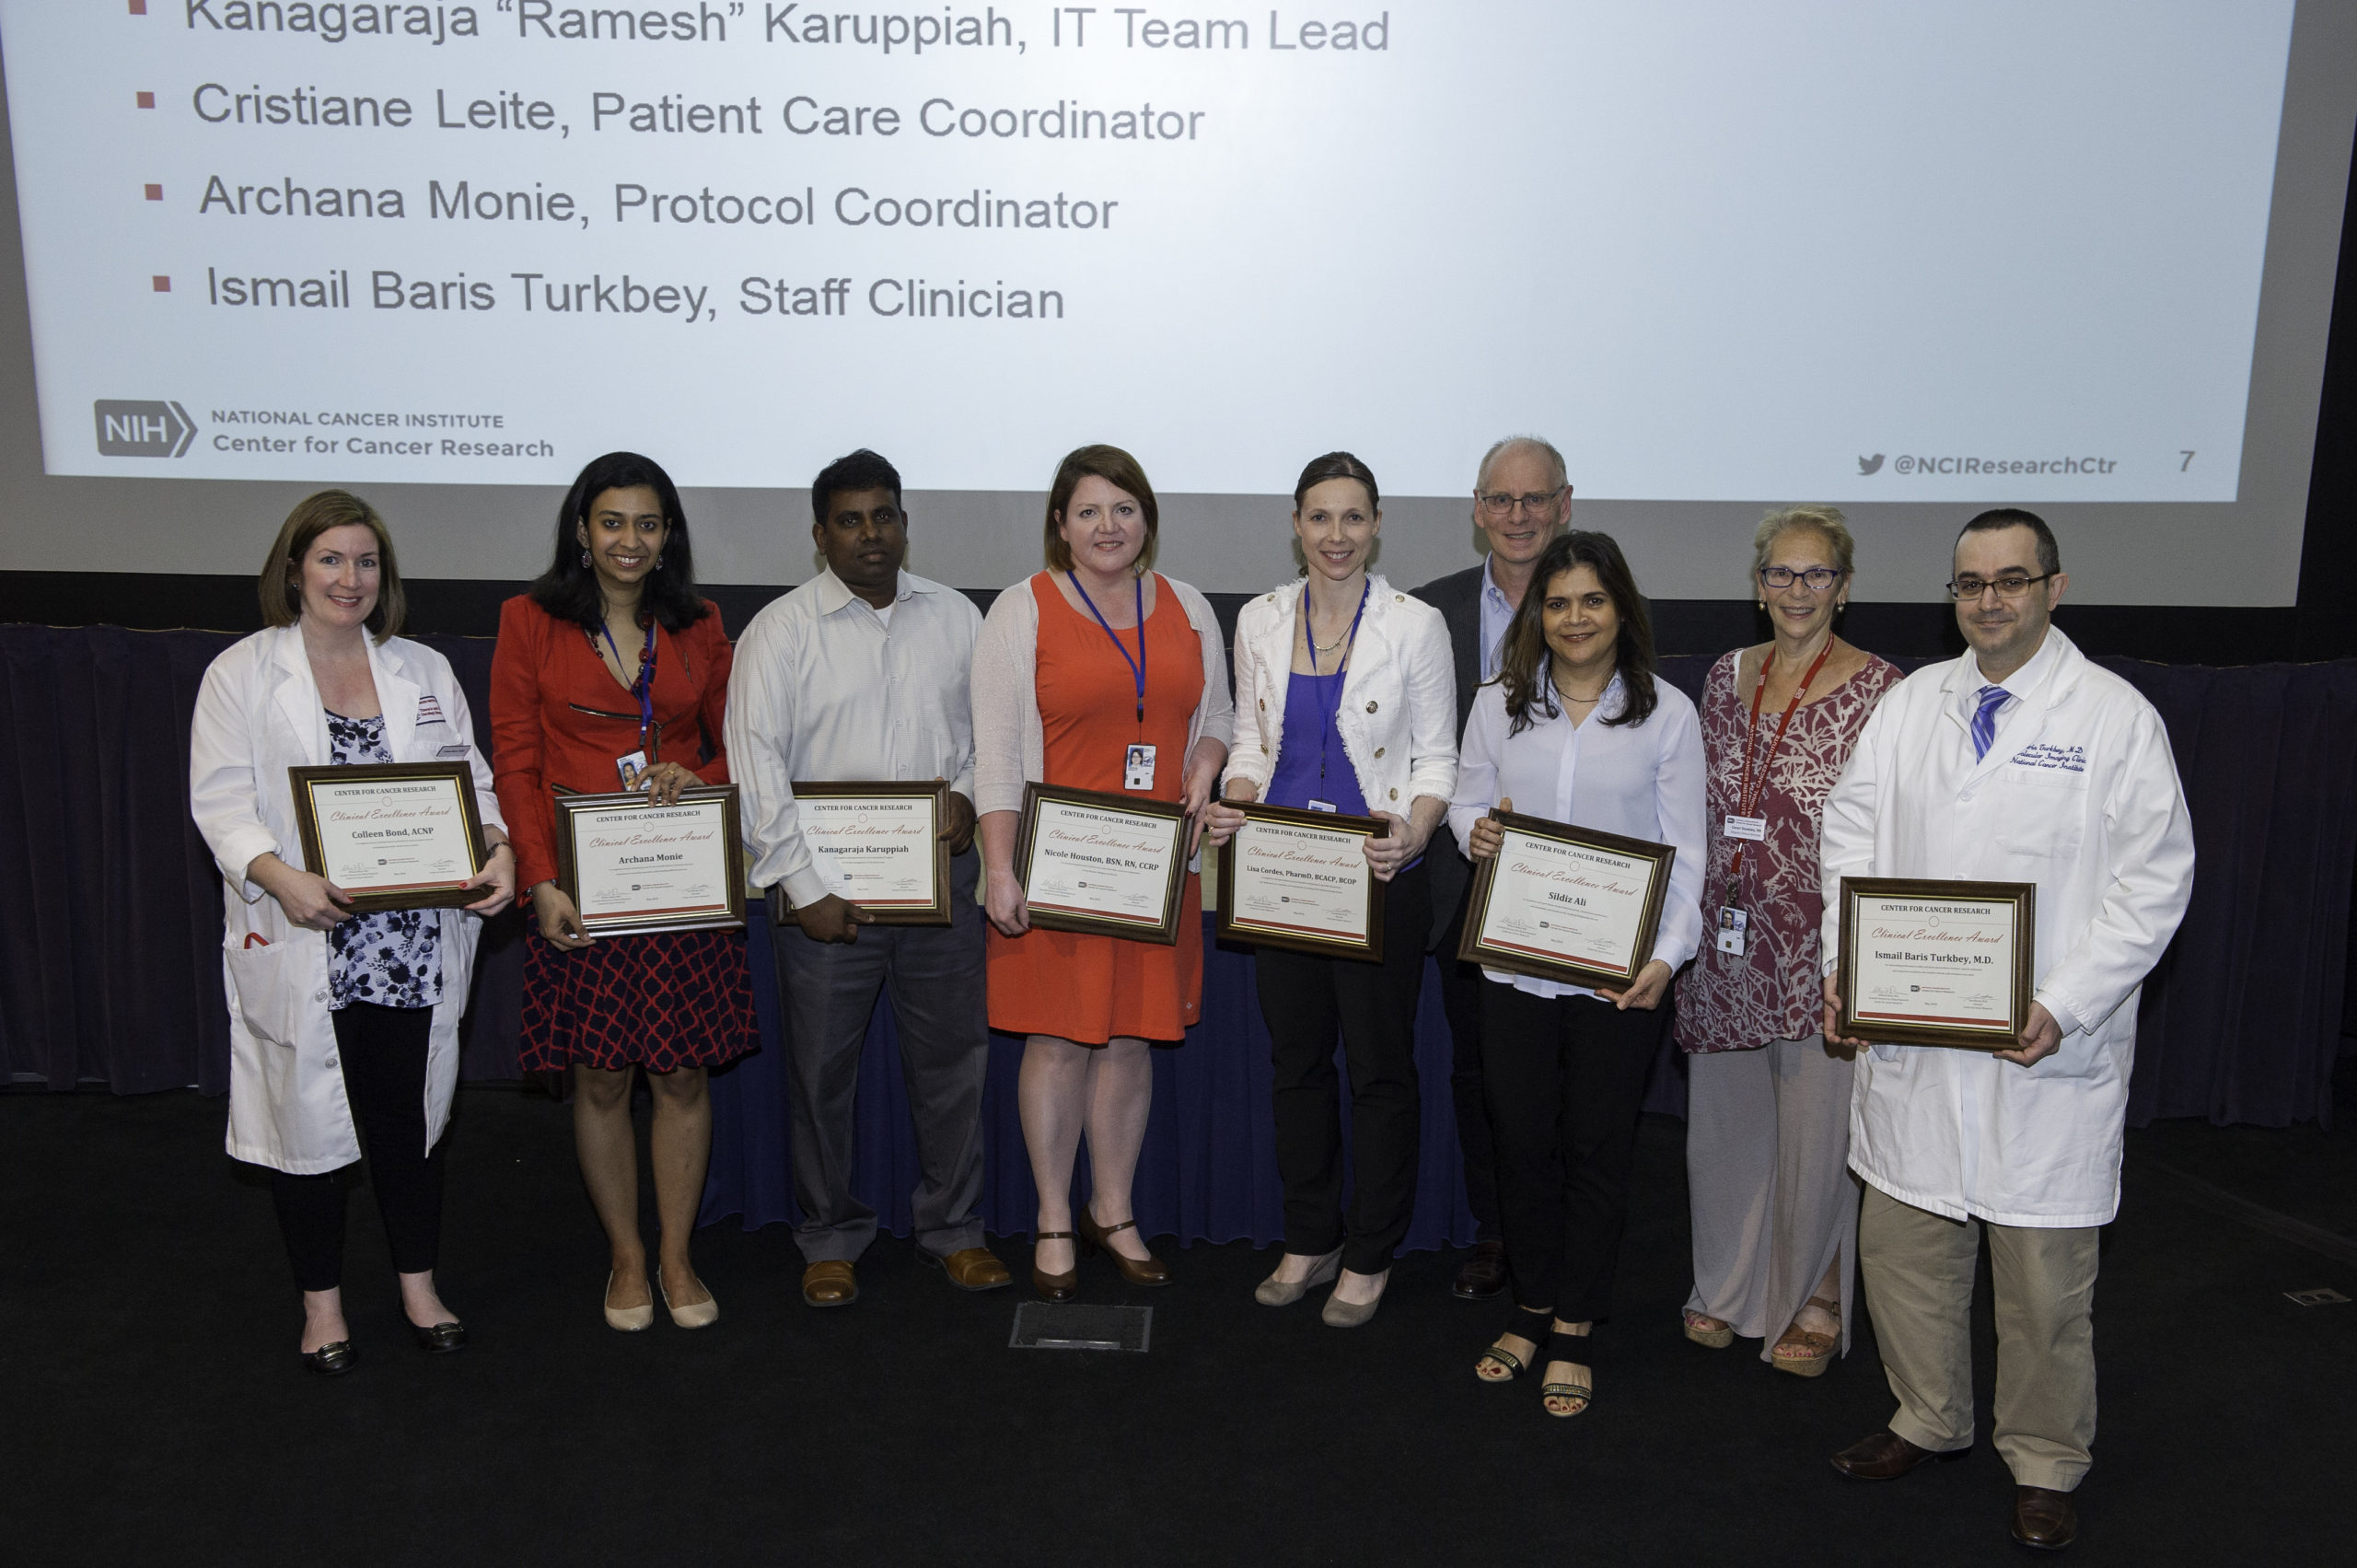 NIH team receiving award